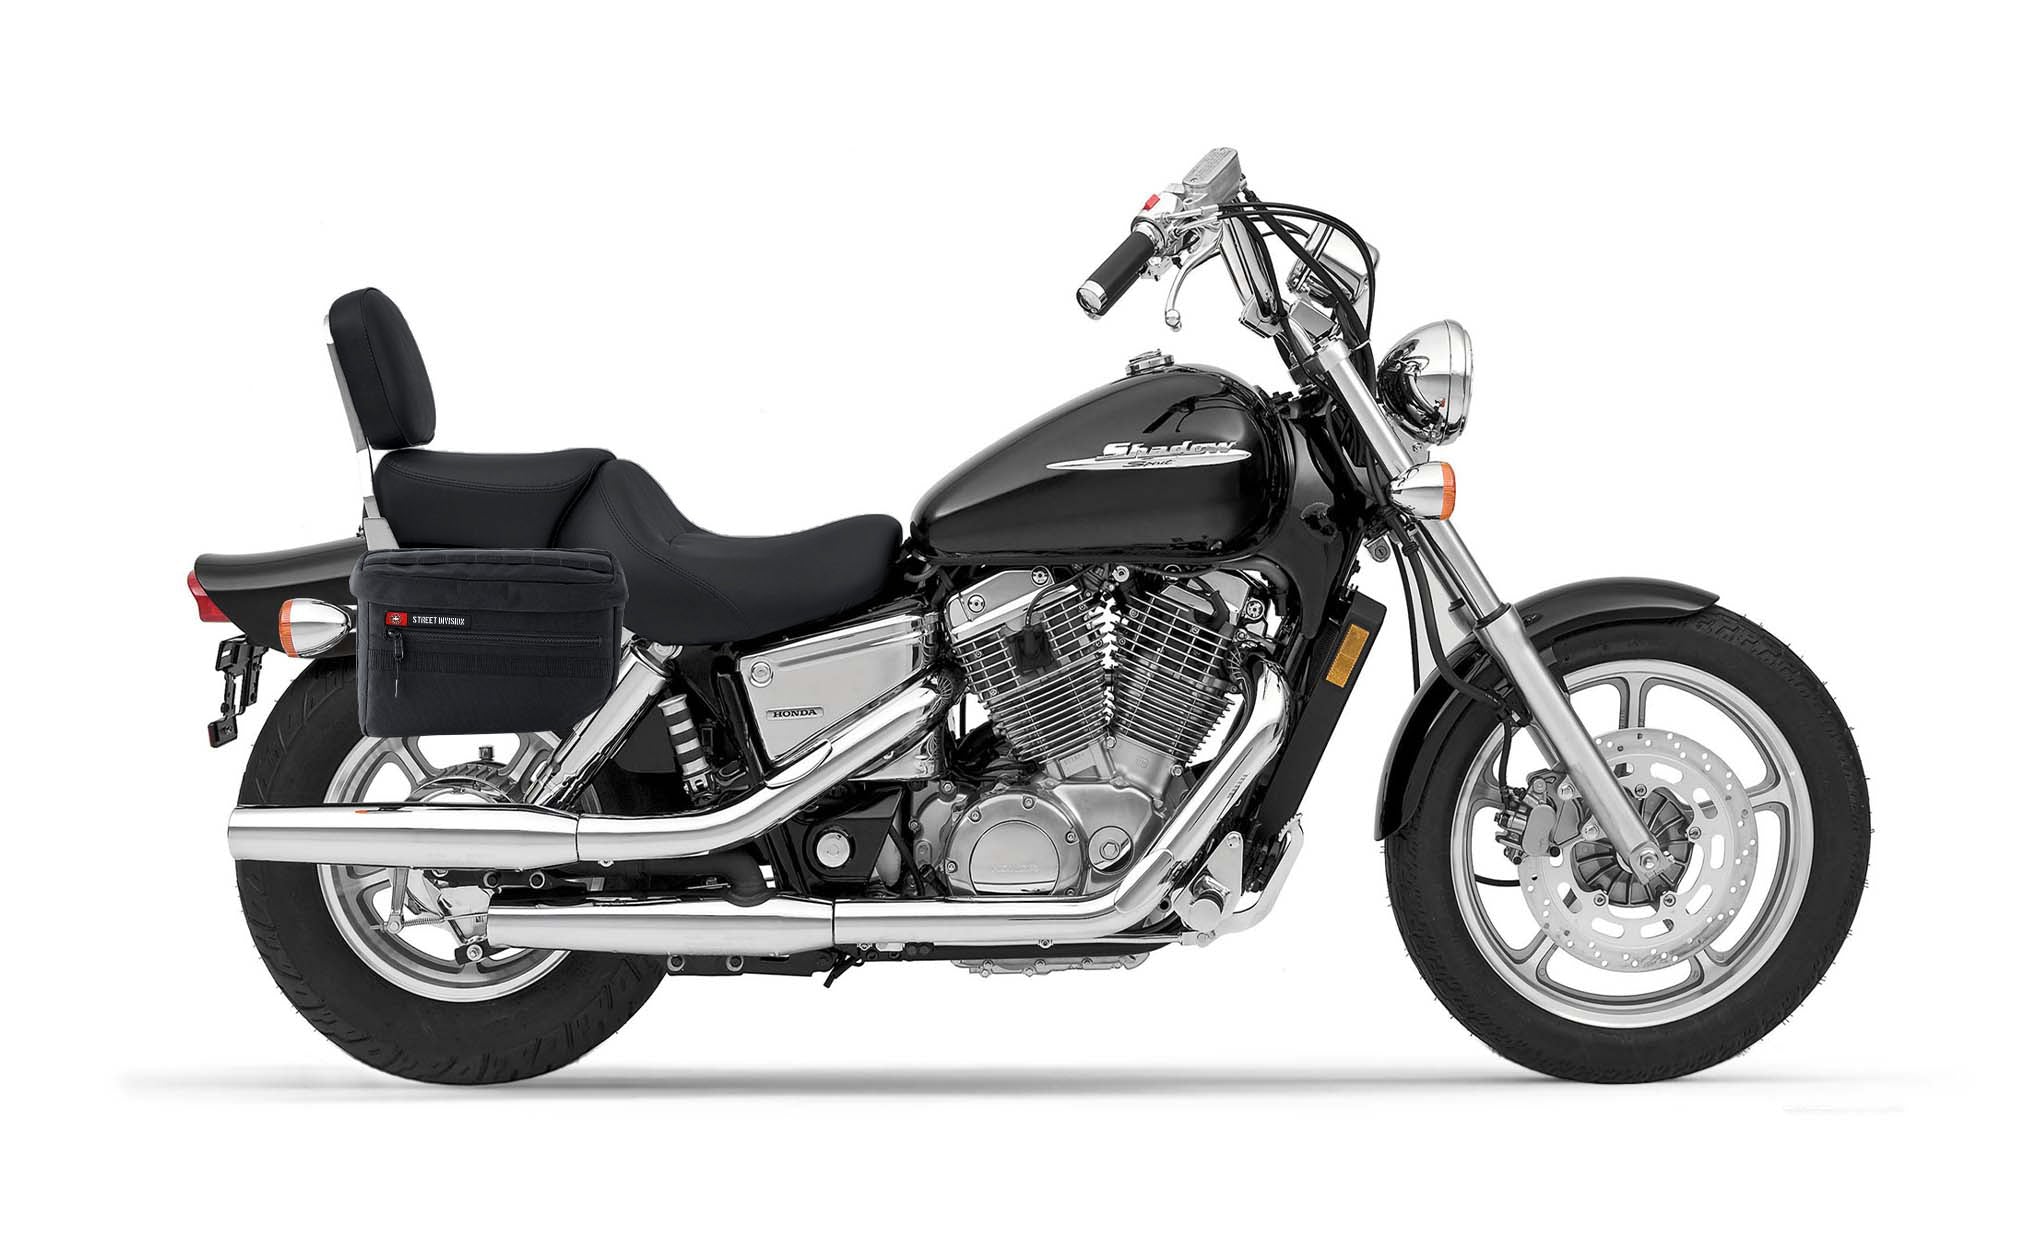 Viking Patriot Large Honda Shadow 1100 Spirit Motorcycle Throw Over Saddlebags on Bike Photo @expand